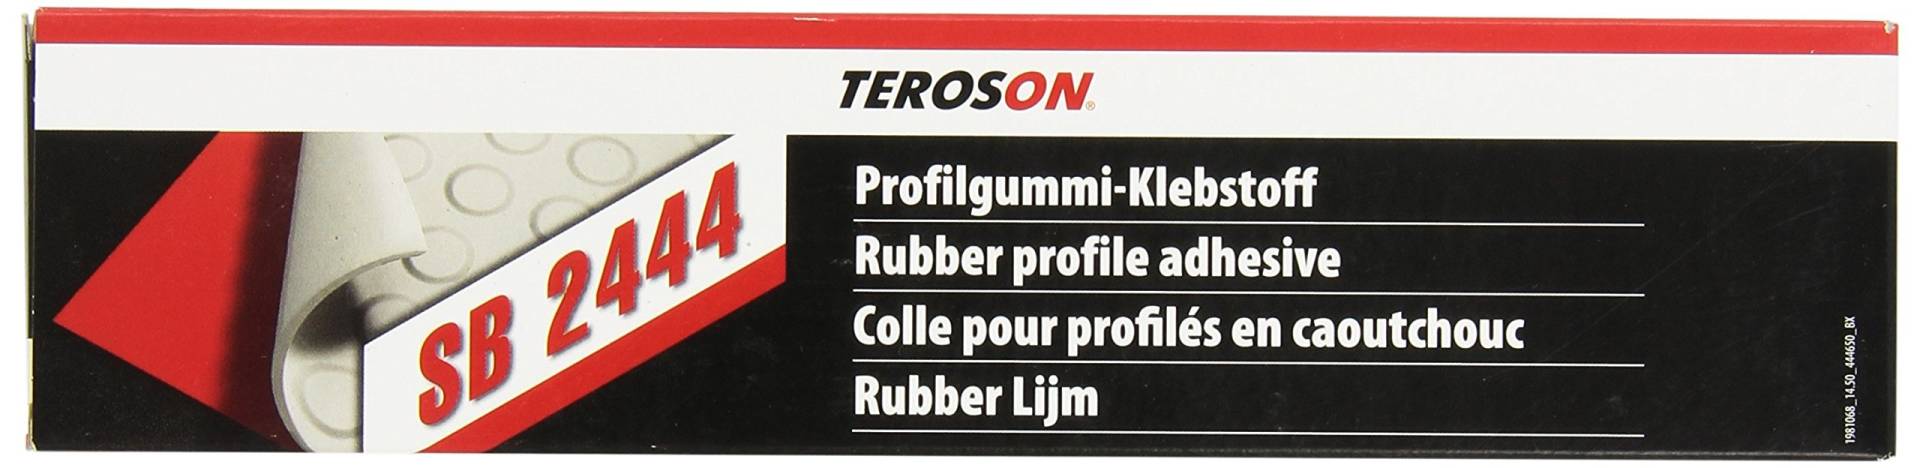 Teroson 444650 Profilgummikleber, 175 g von Teroson